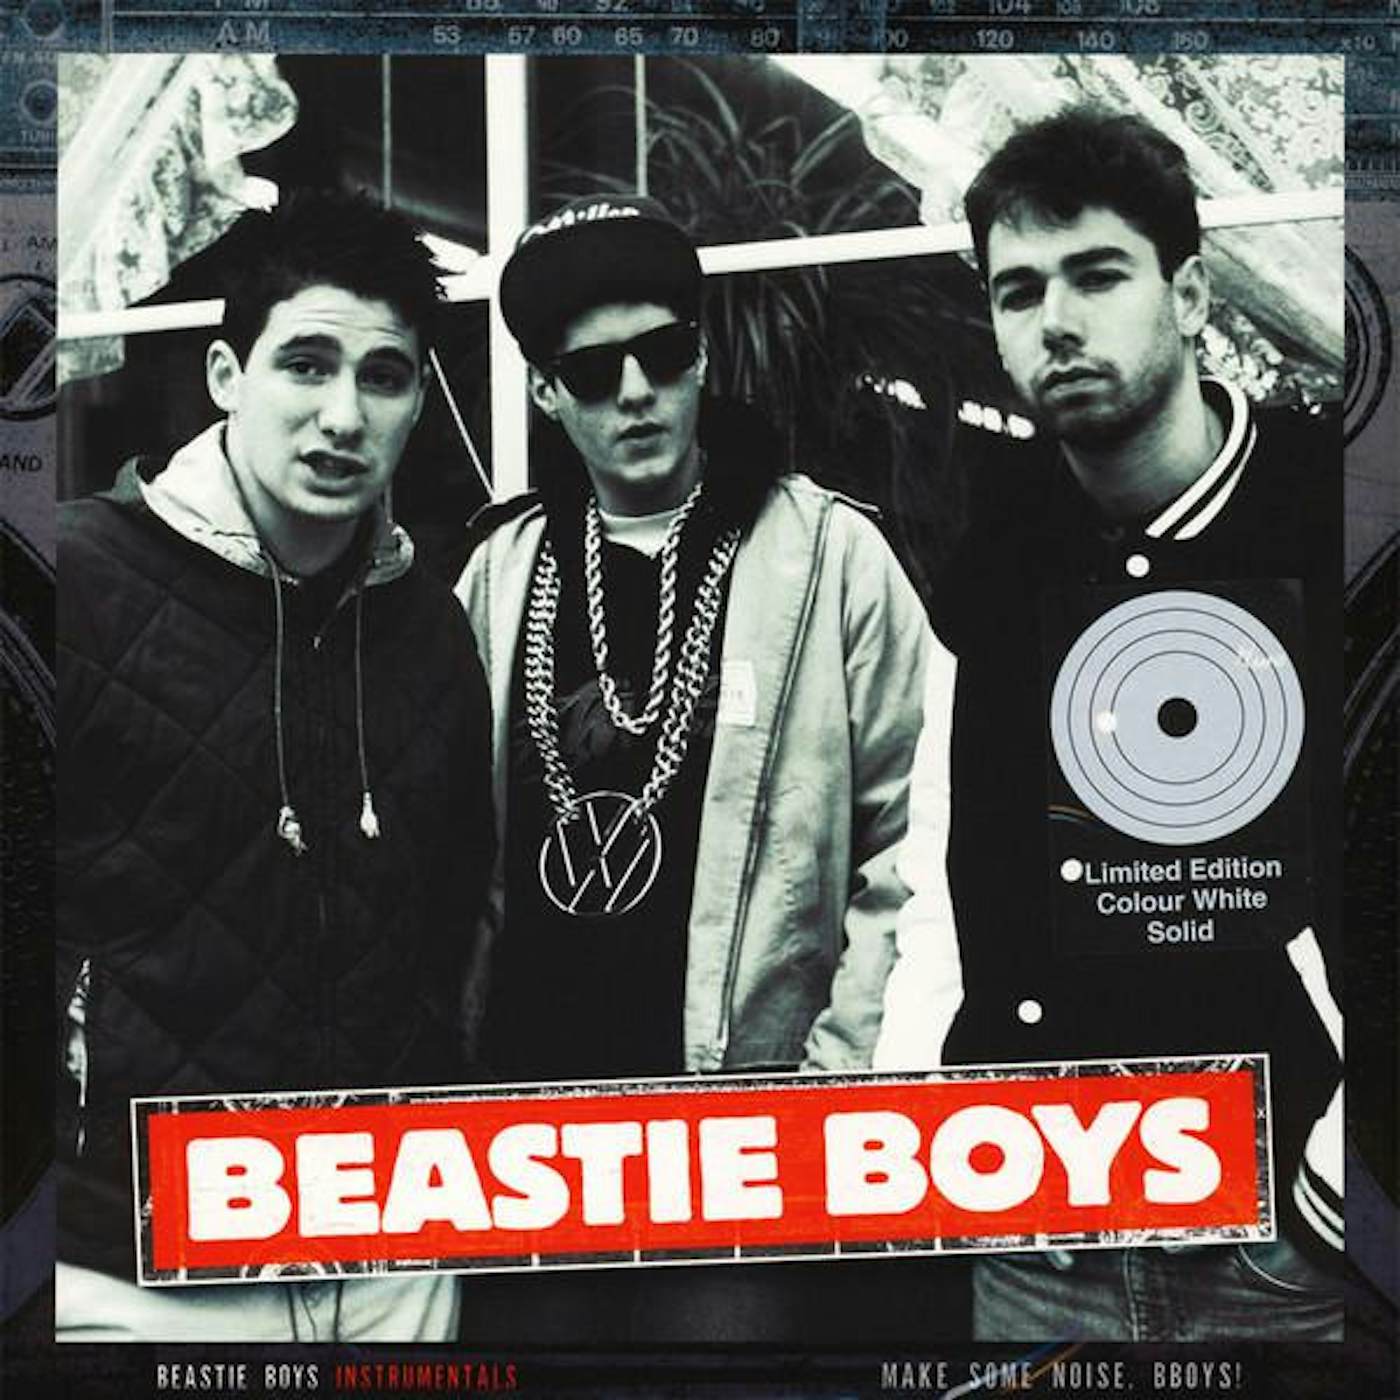 Beastie Boys MAKE SOME NOISE BBOYS - INSTRUMENTALS Vinyl Record